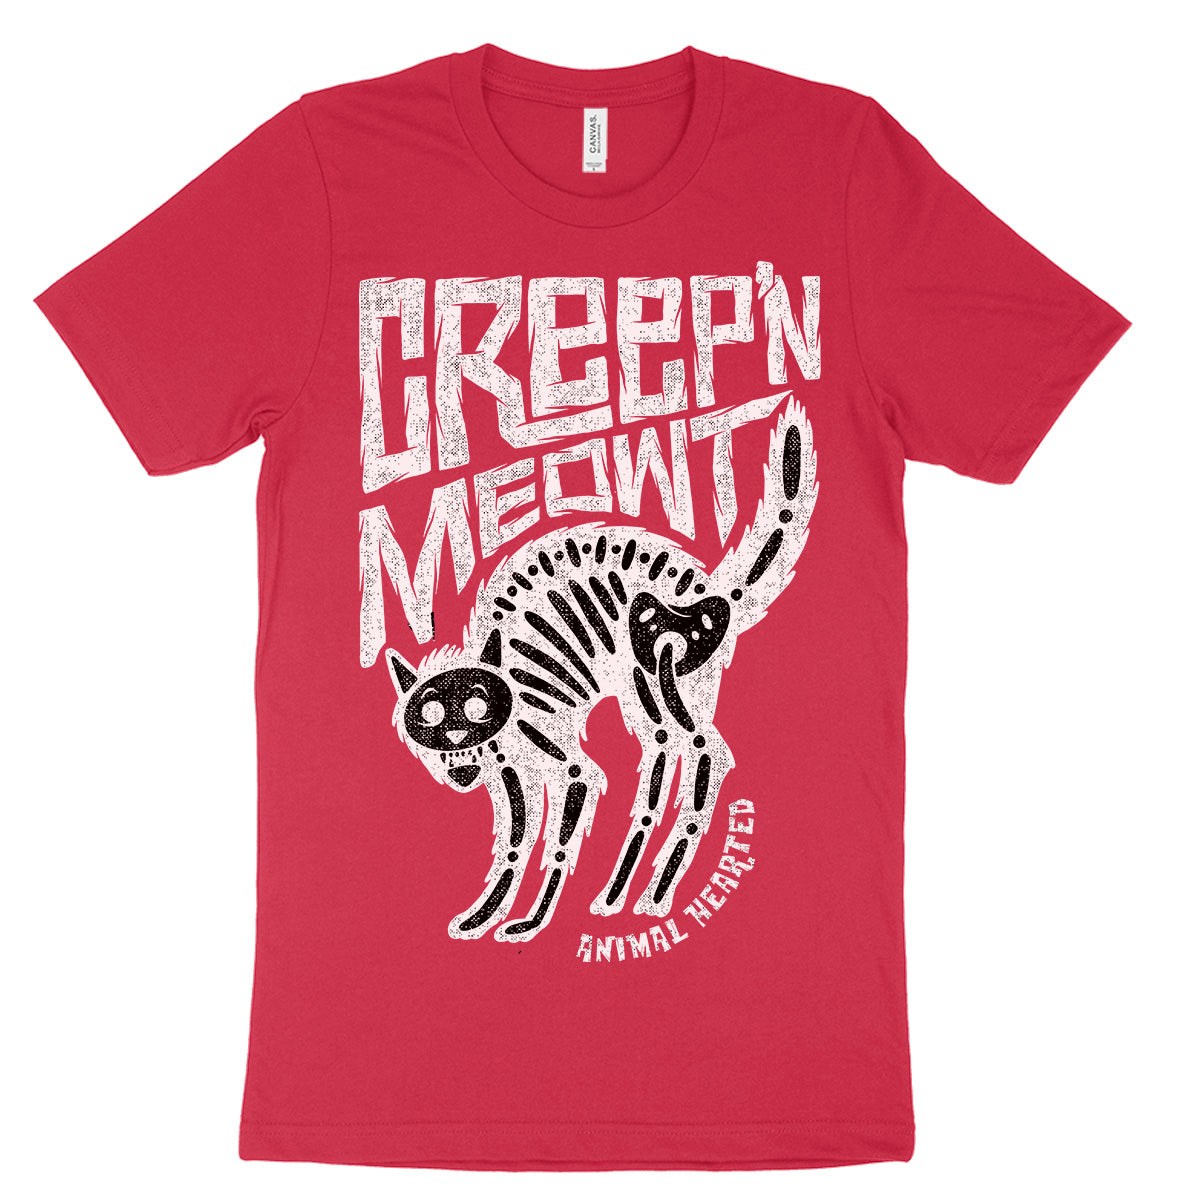 Creepin Meowt T-Shirt